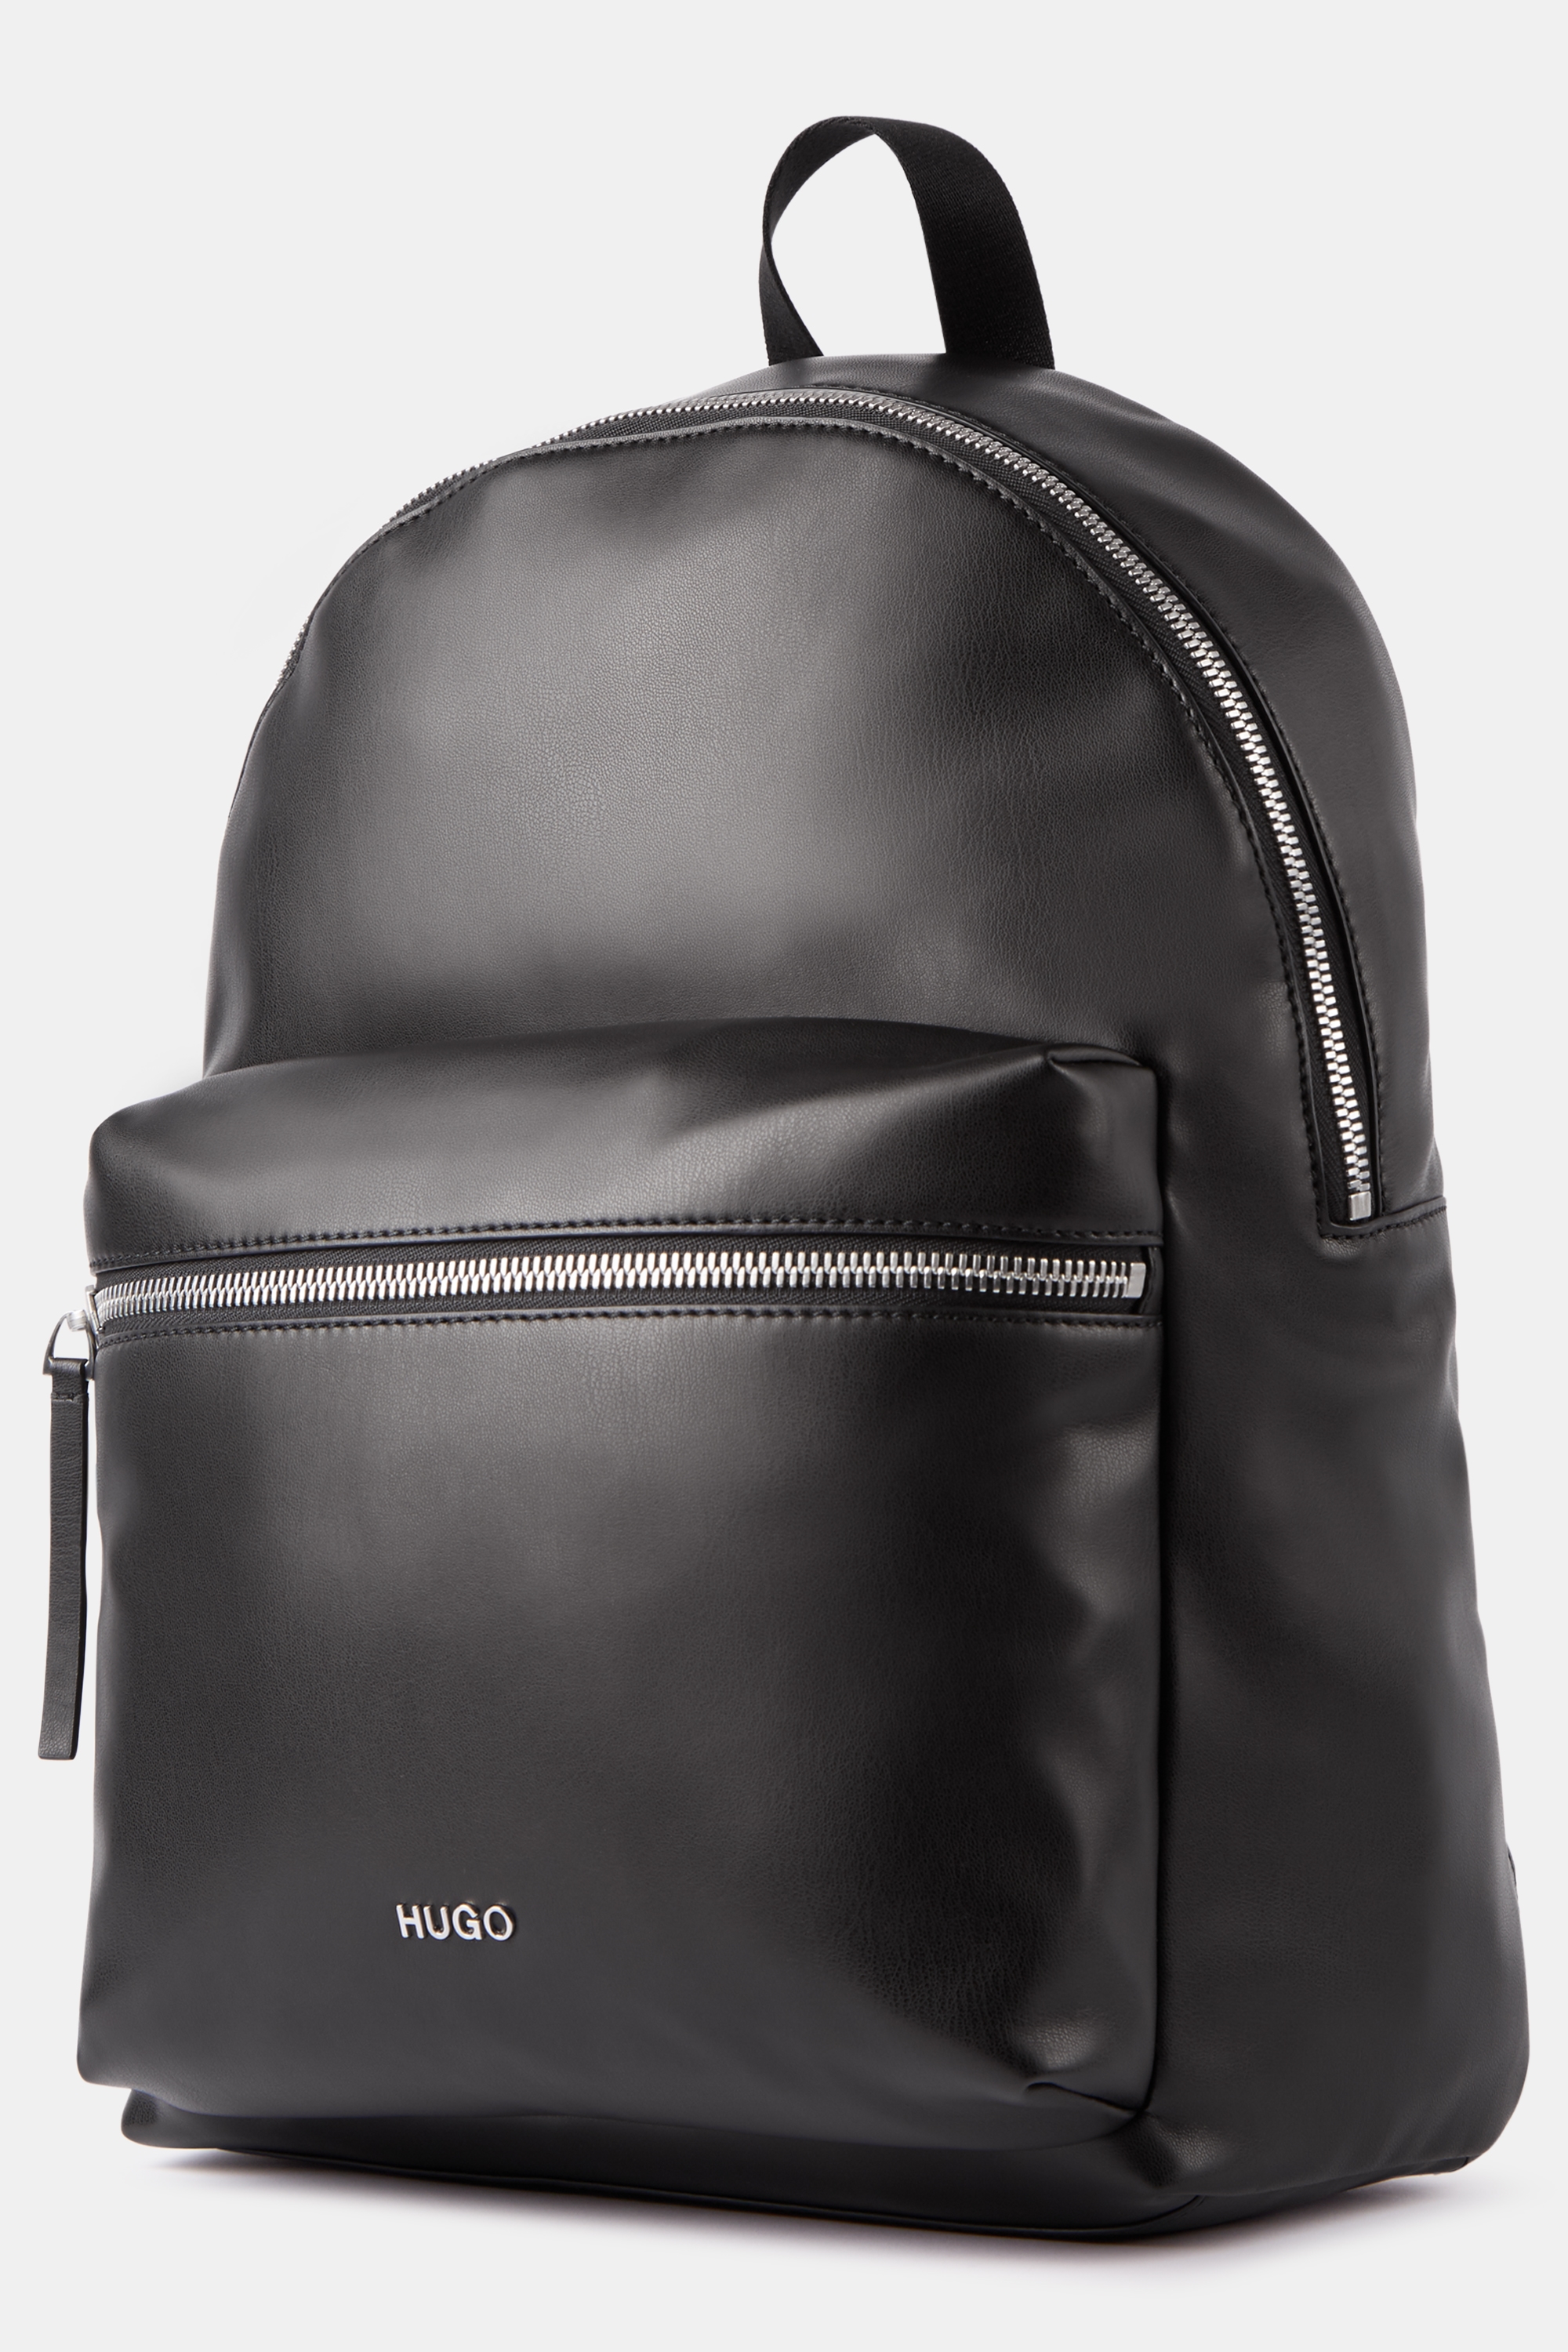 hugo boss leather bag